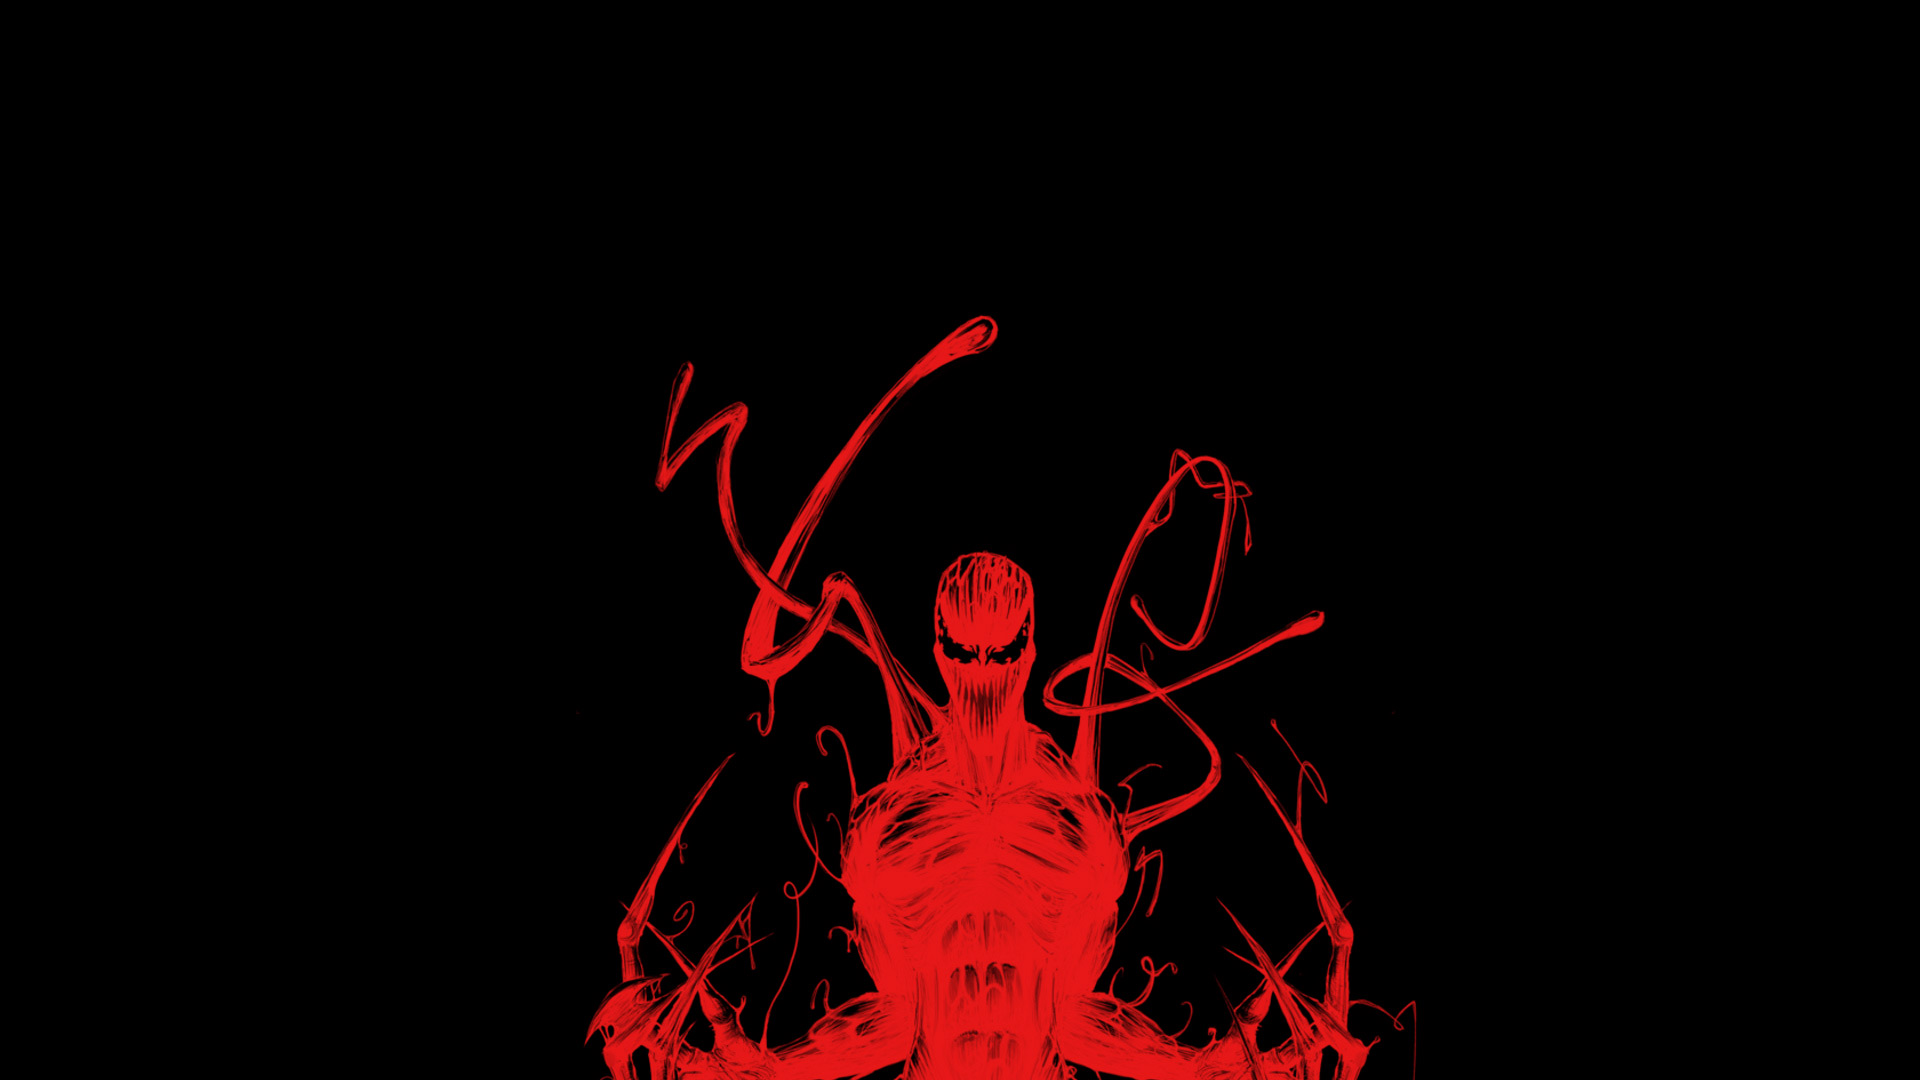 Download wallpaper for 1600x900 resolution | Spider-Man Marvel Carnage  Black Red HD | anime | Wallpaper Better